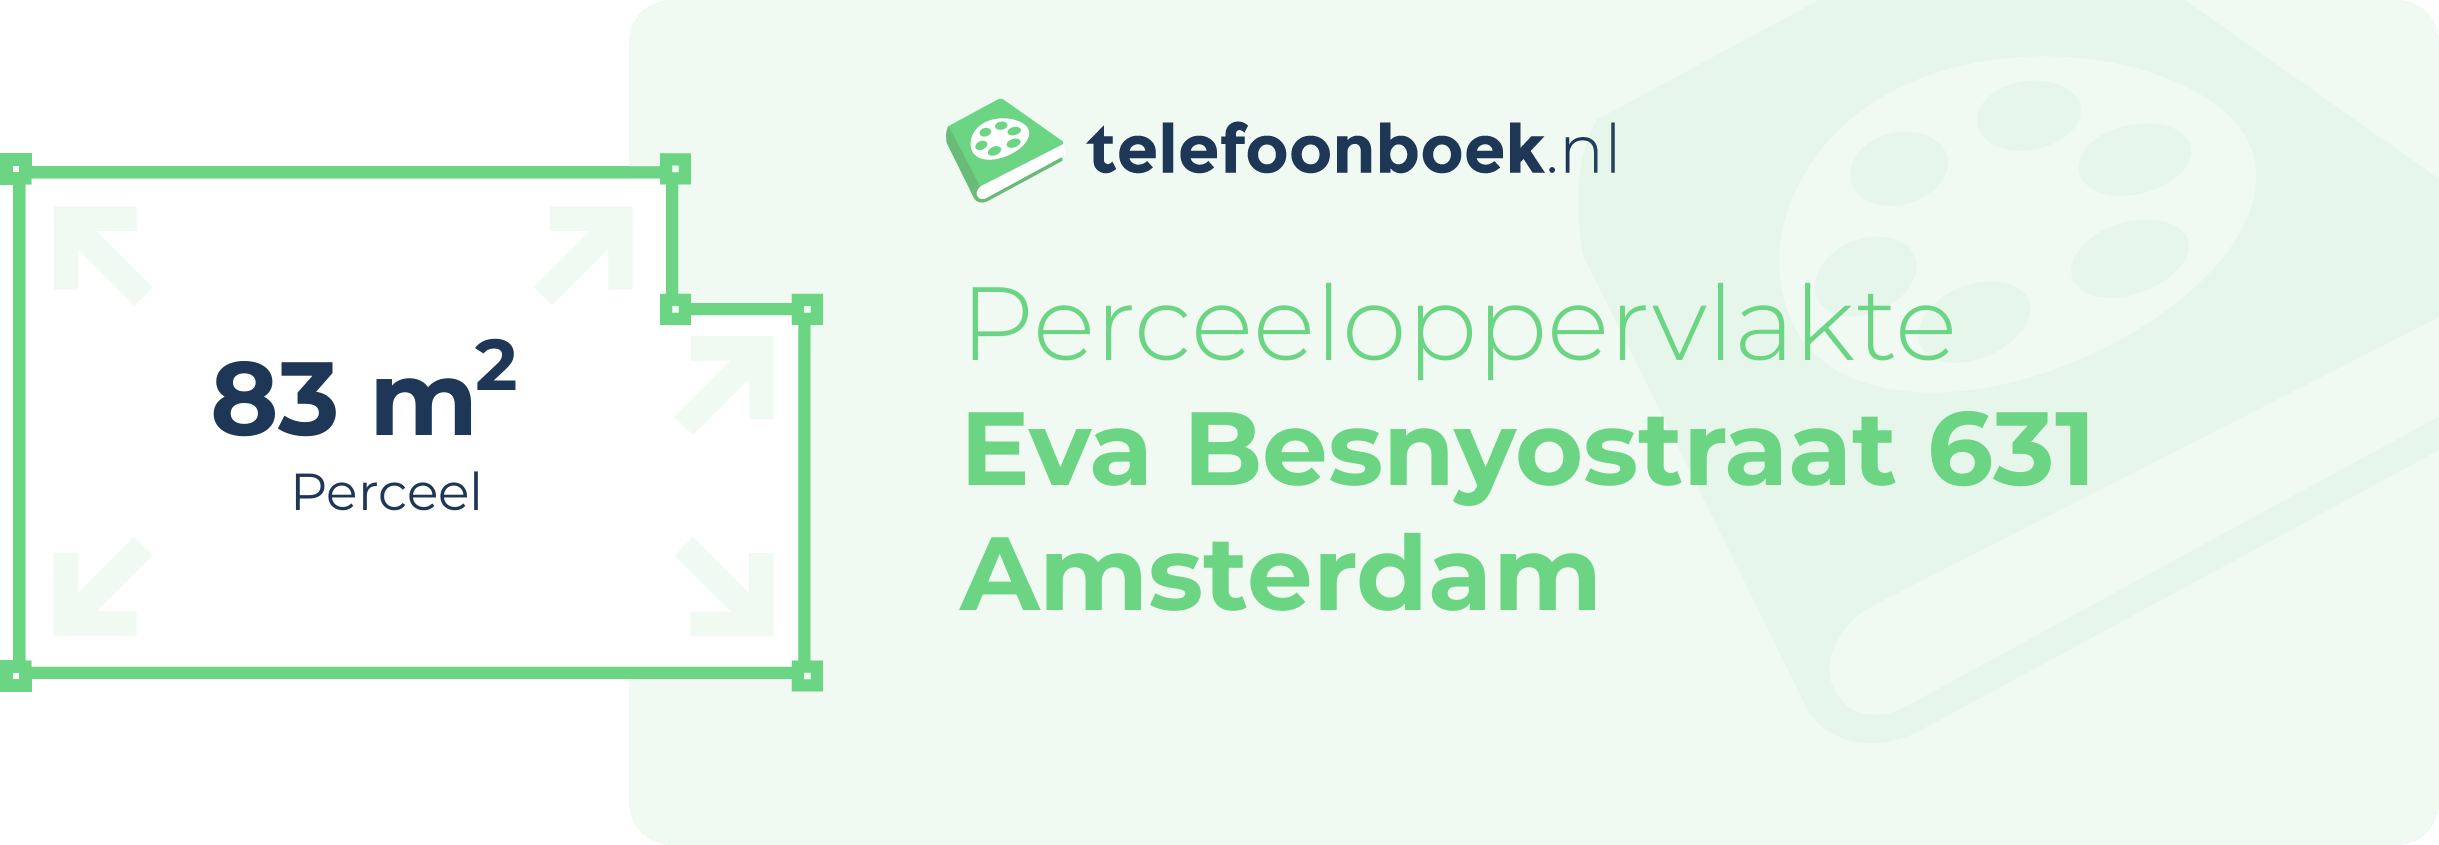 Perceeloppervlakte Eva Besnyostraat 631 Amsterdam